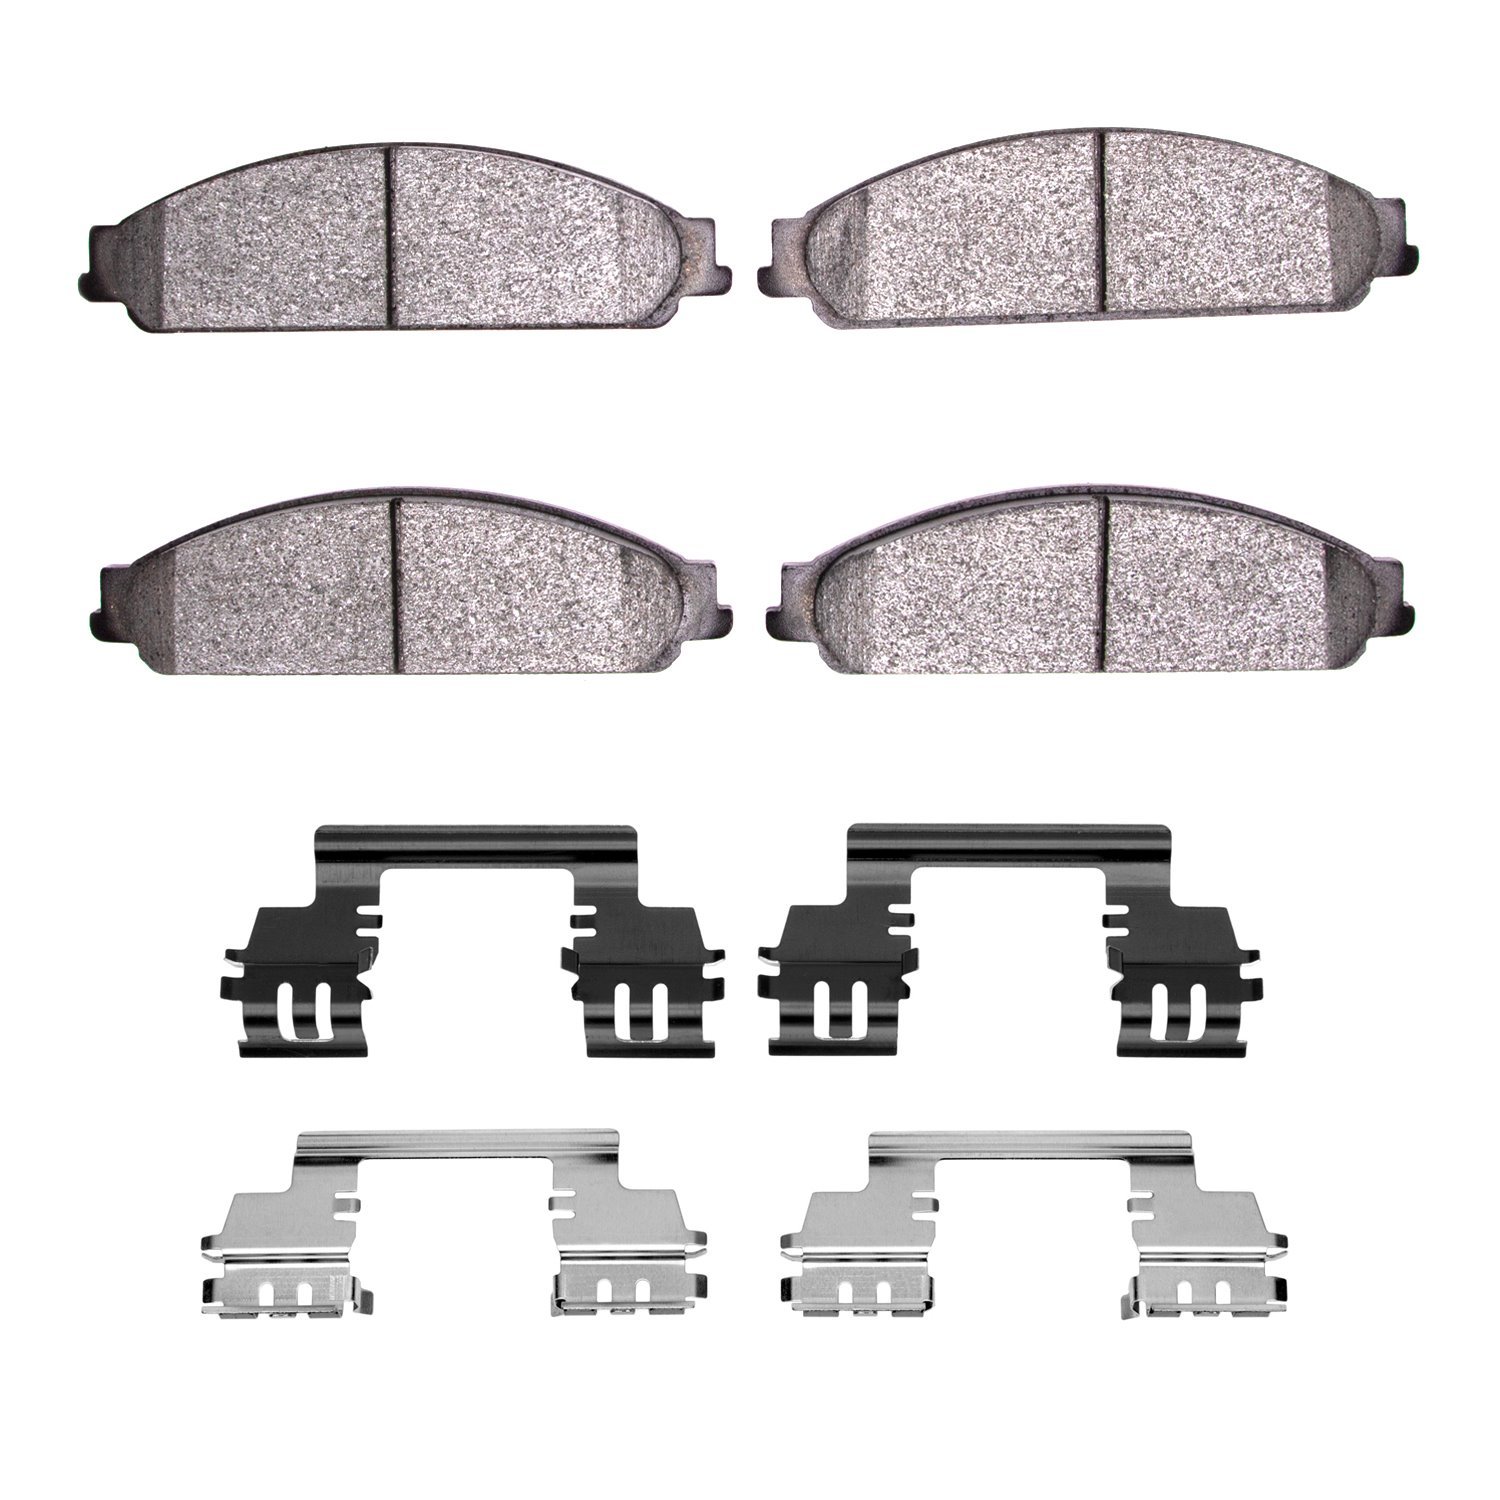 1310-1070-01 3000-Series Ceramic Brake Pads & Hardware Kit, 2008-2009 Ford/Lincoln/Mercury/Mazda, Position: Front